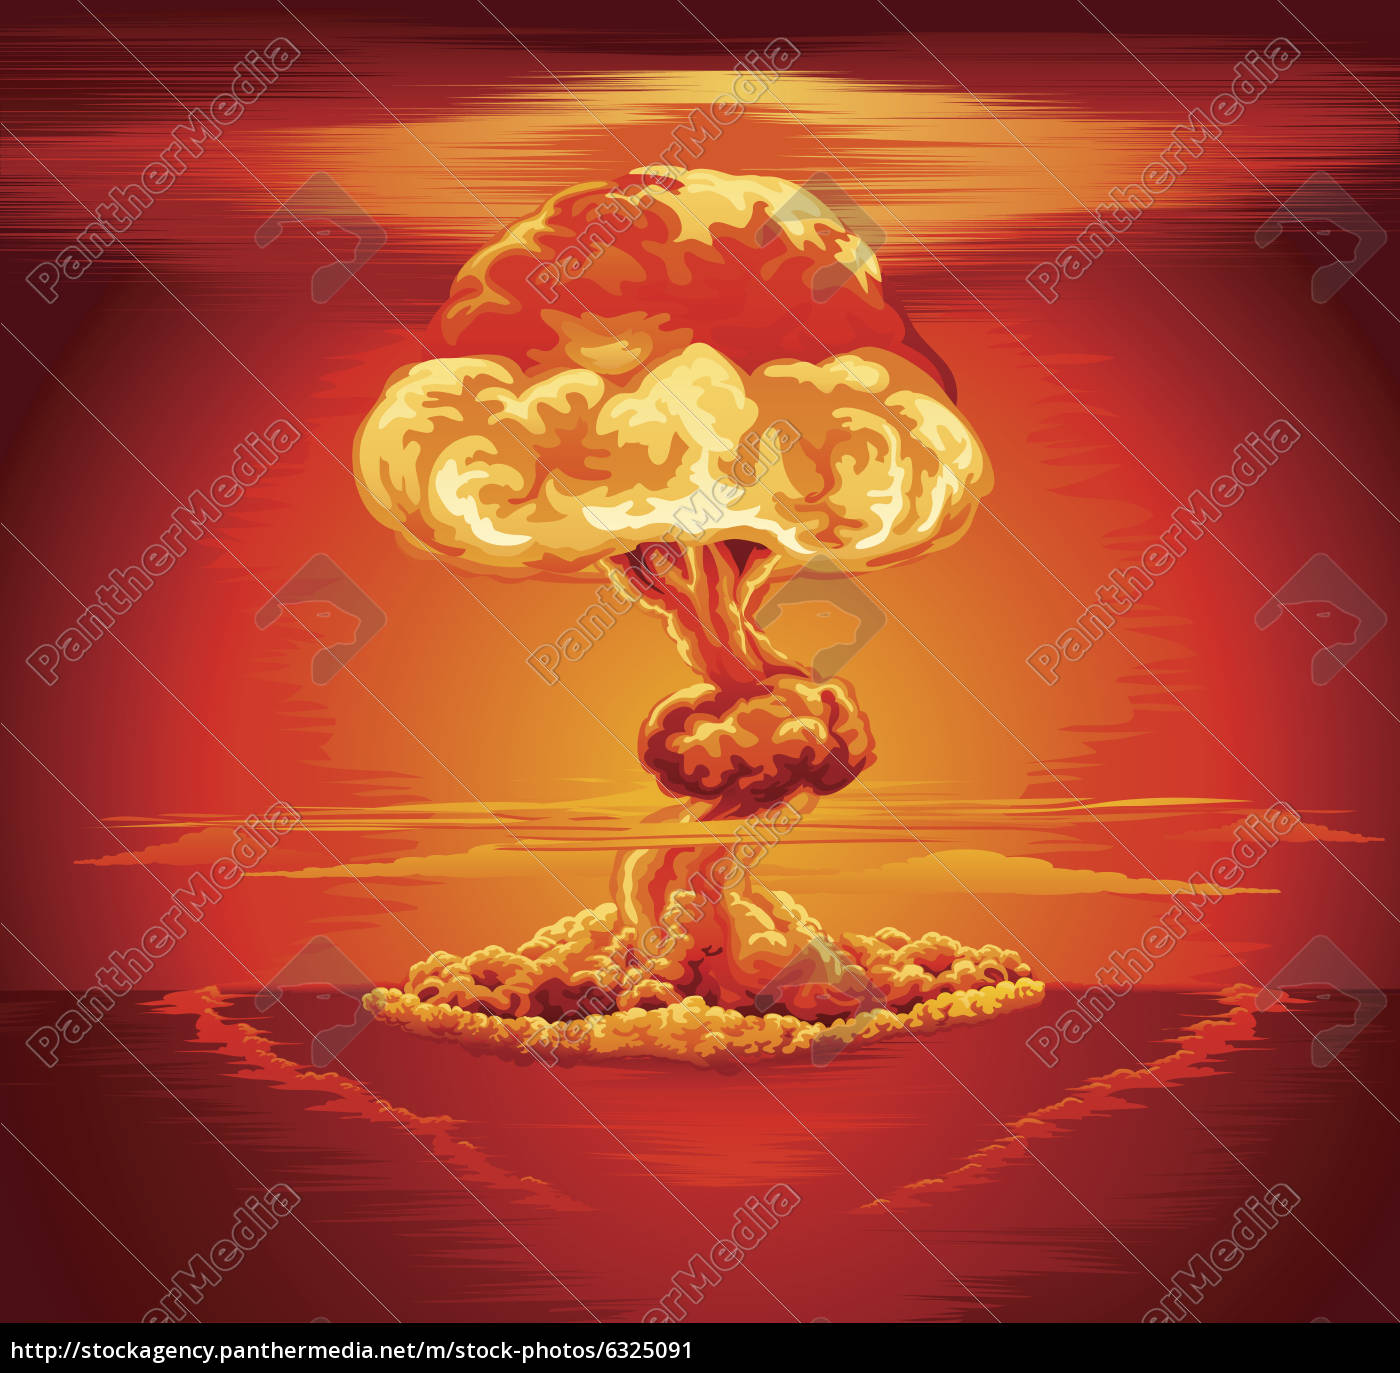 Nukleare Explosion Atompilz Lizenzfreies Bild 6325091 Bildagentur Panthermedia